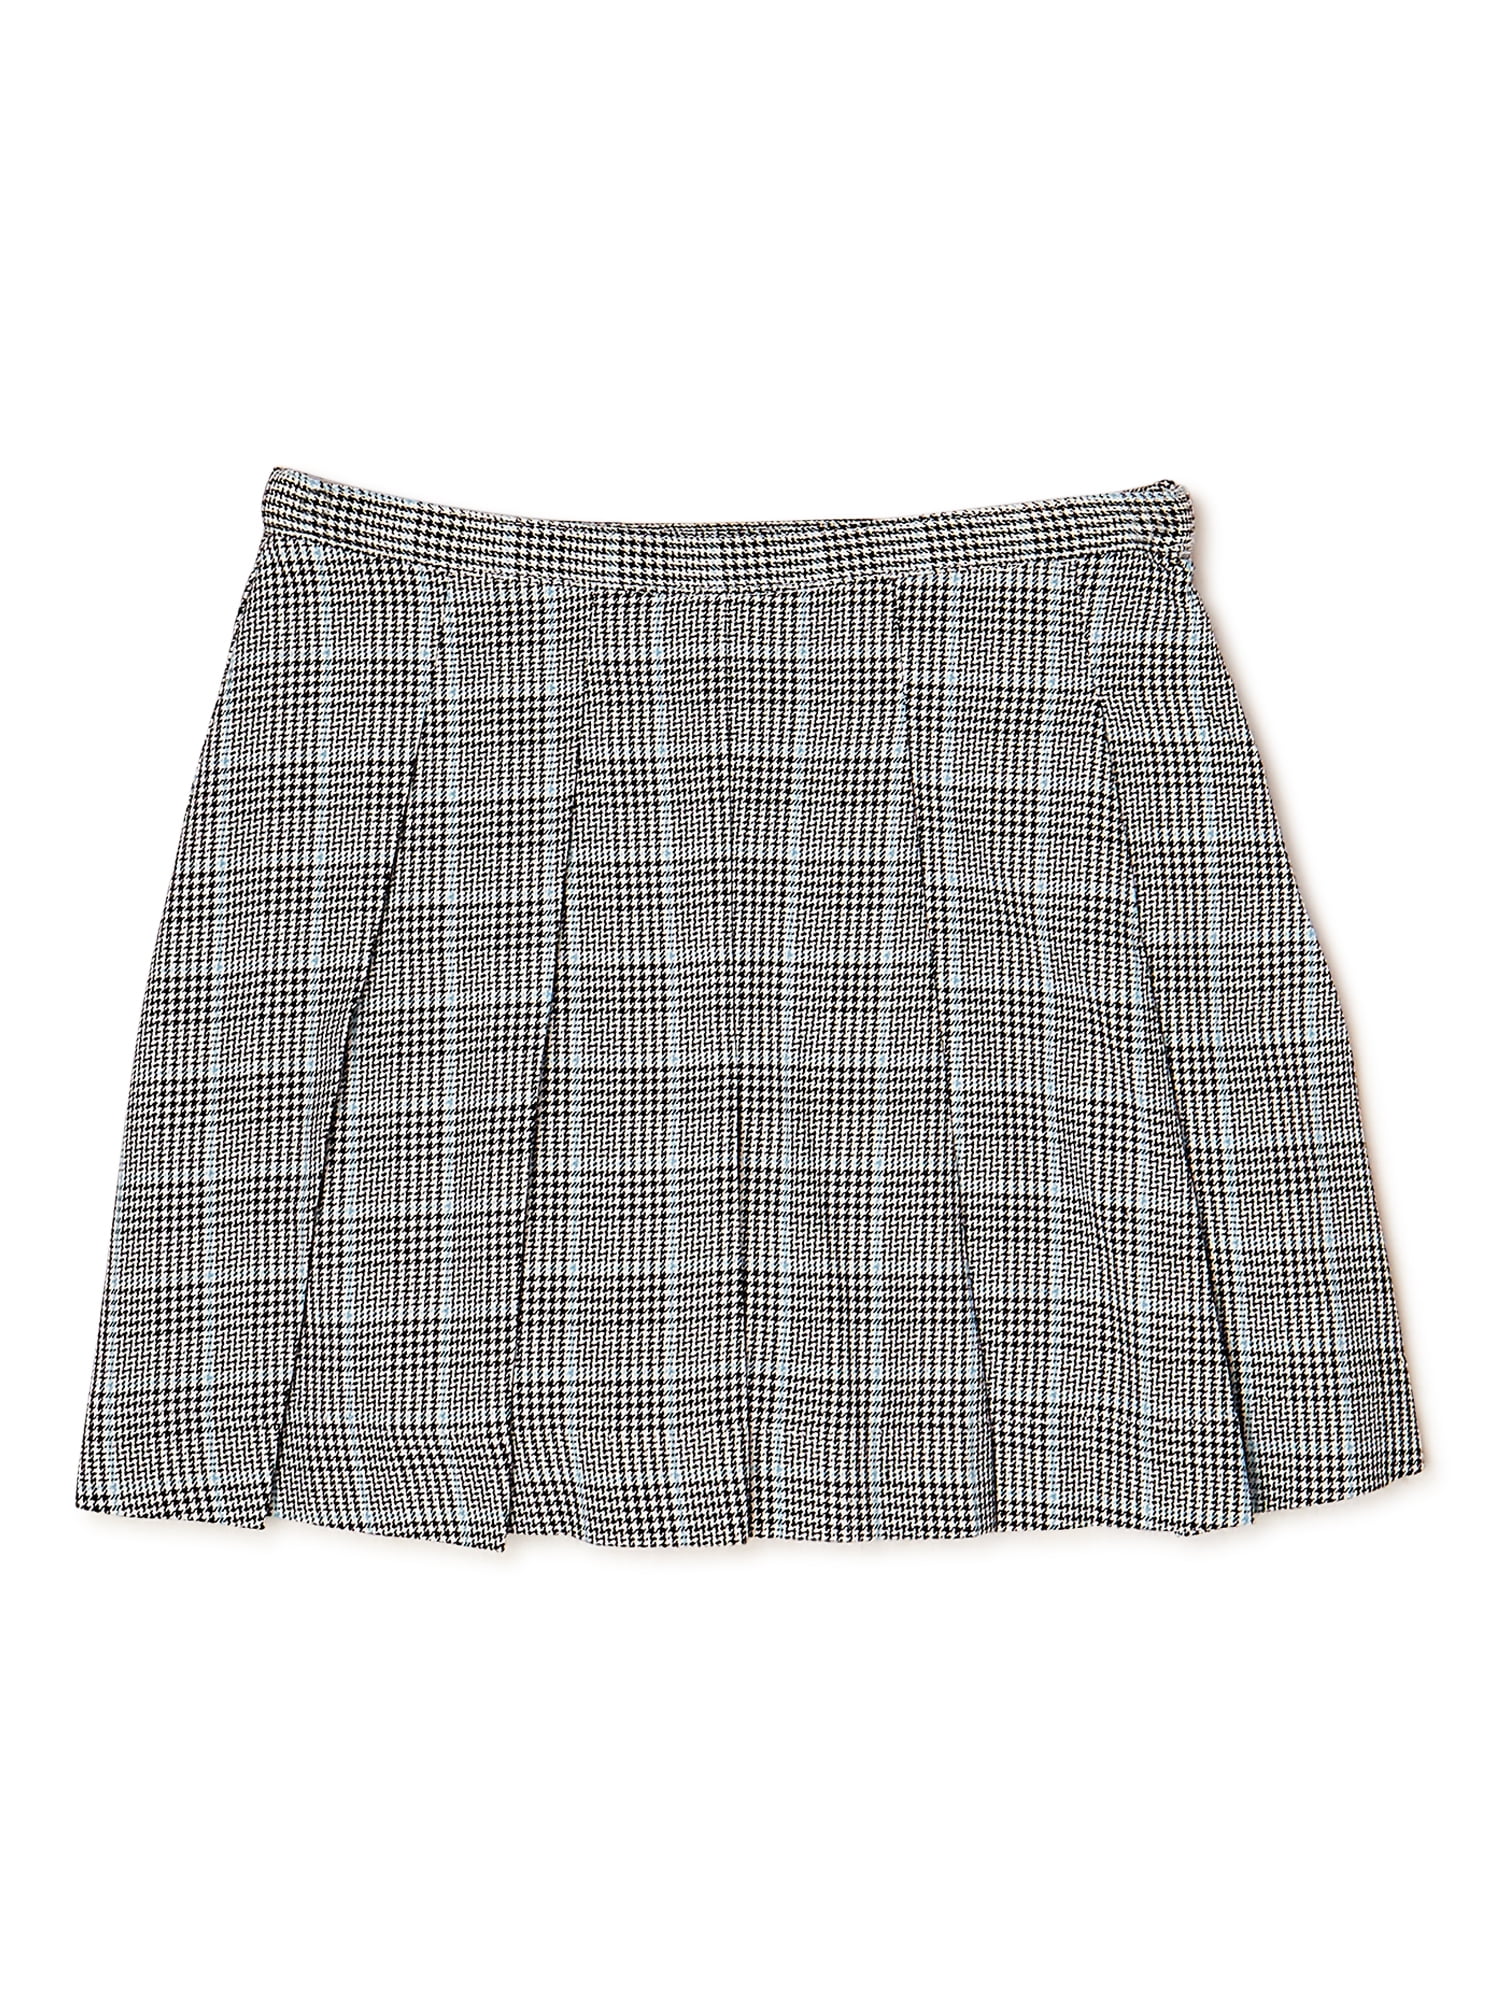 Wonder Nation Girls Pleated Skirt, Sizes 4-18 & Plus